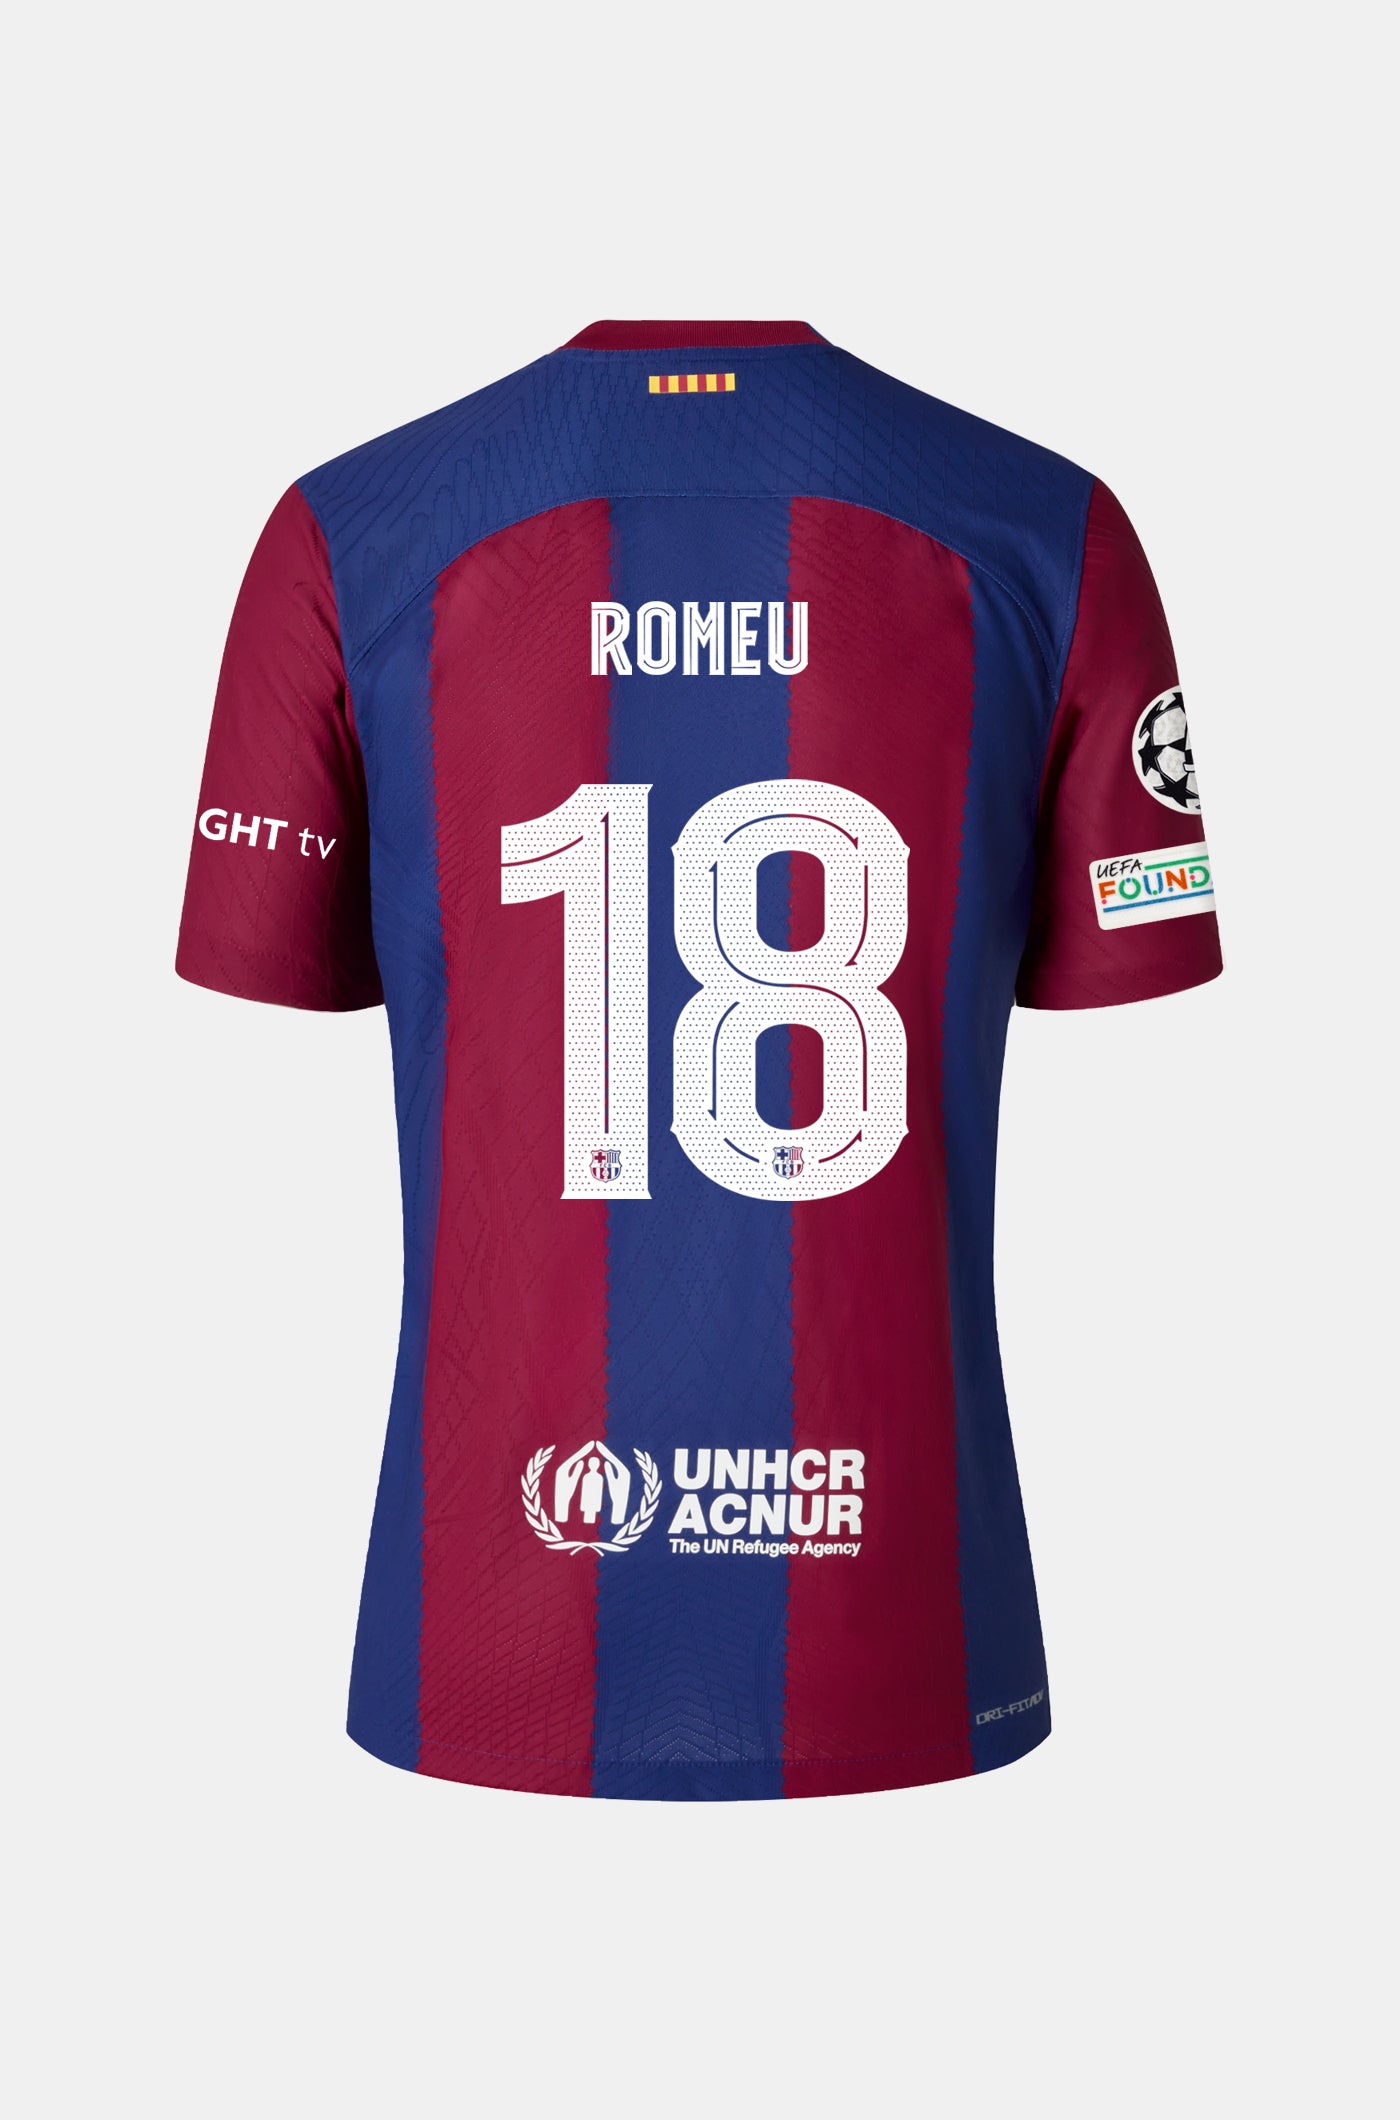 UCL FC Barcelona Home Shirt 23/24 Player's Edition - Women - ROMEU